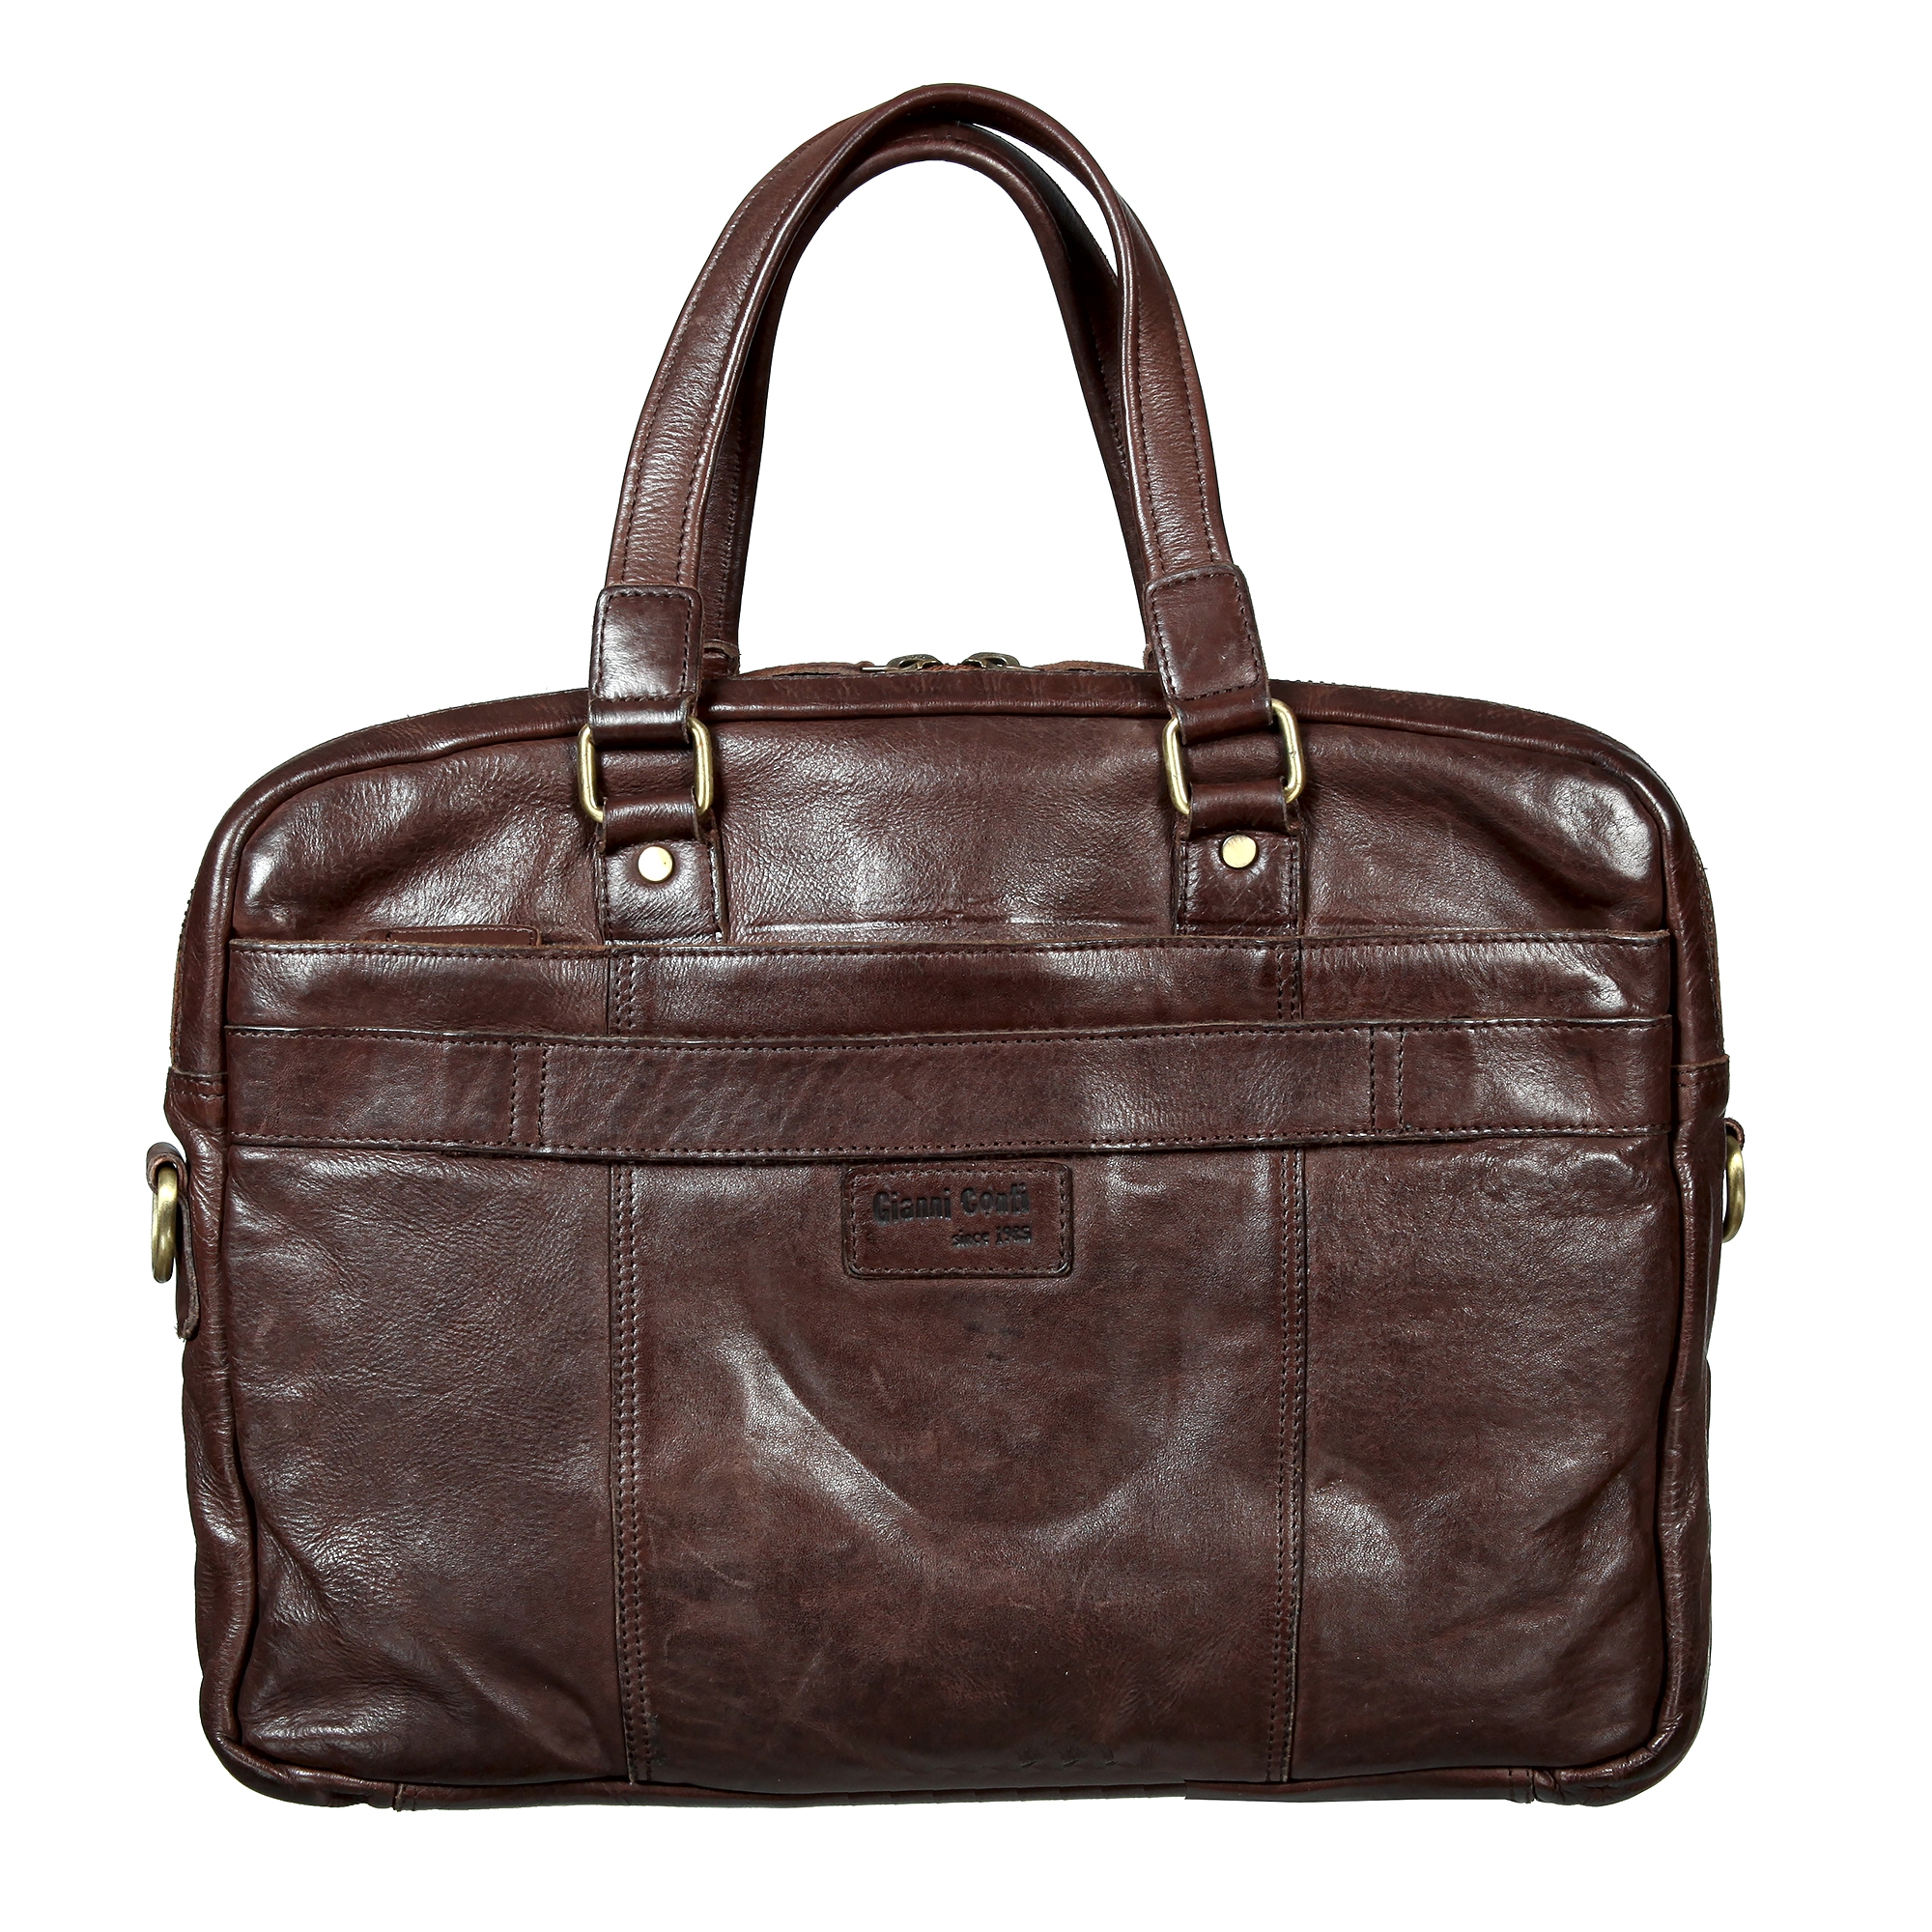 Бизнес сумка
Gianni Conti
4001381 brown Сумки